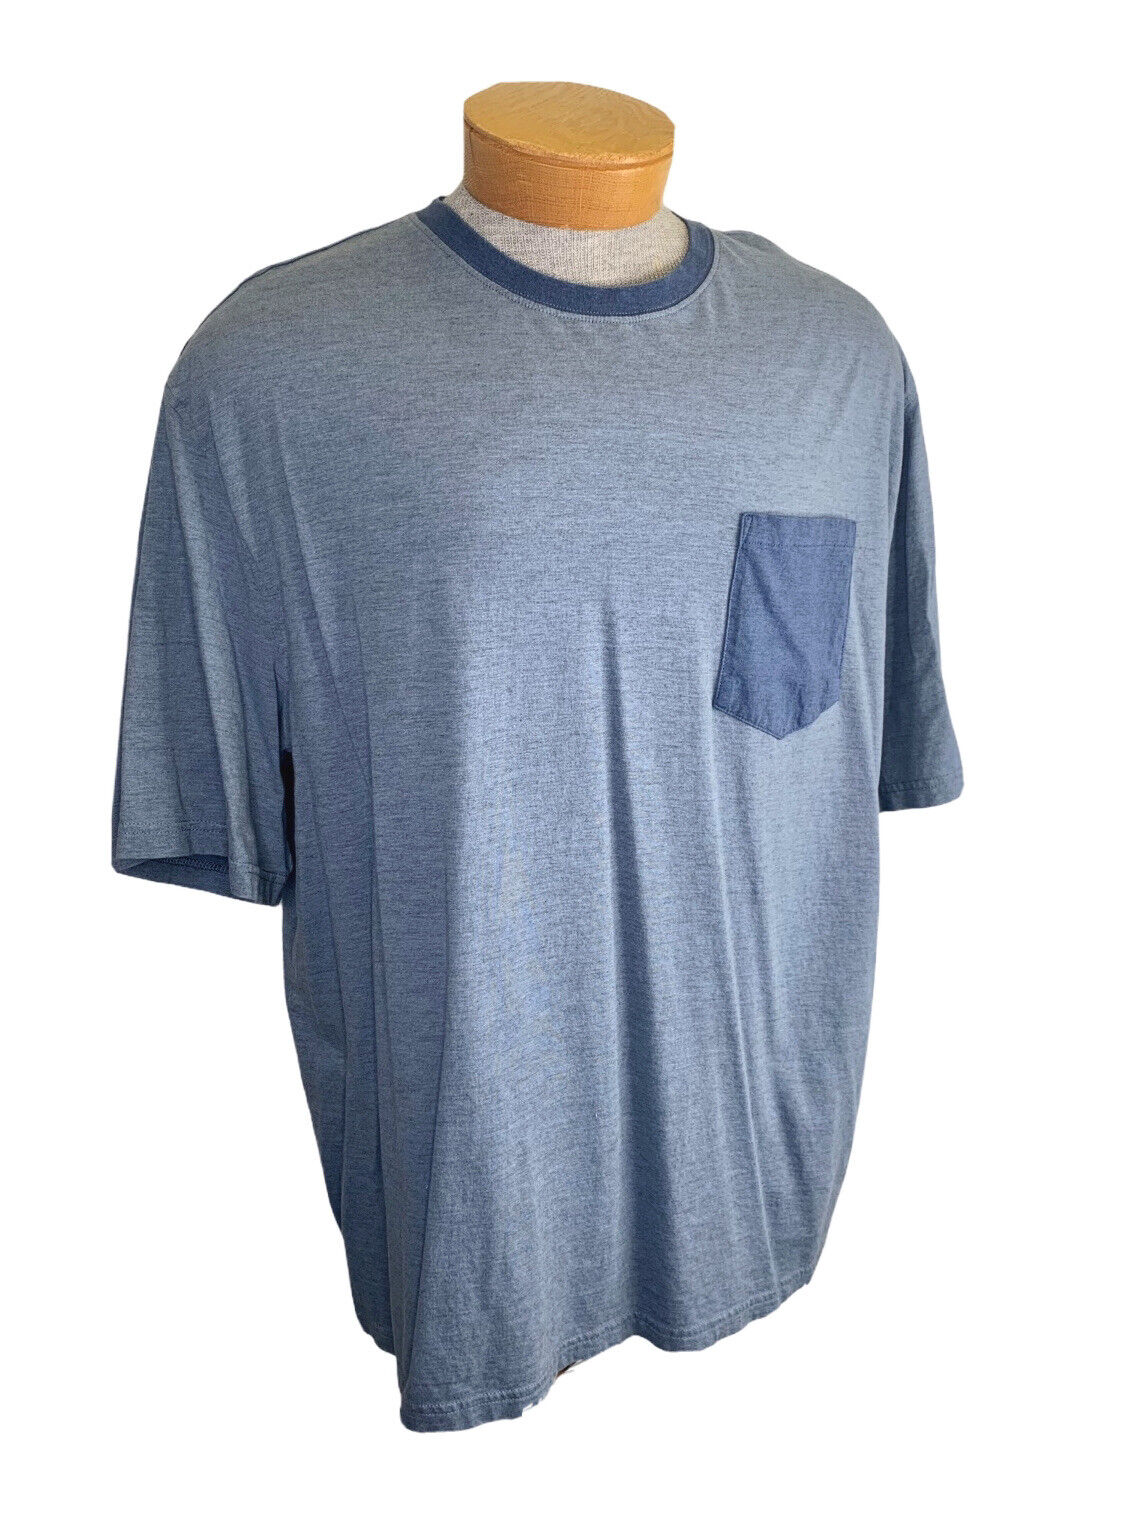 Orvis Tarpon Stamp Short Sleeved Cotton Graphic T-Shirt Fishing Pocket Small